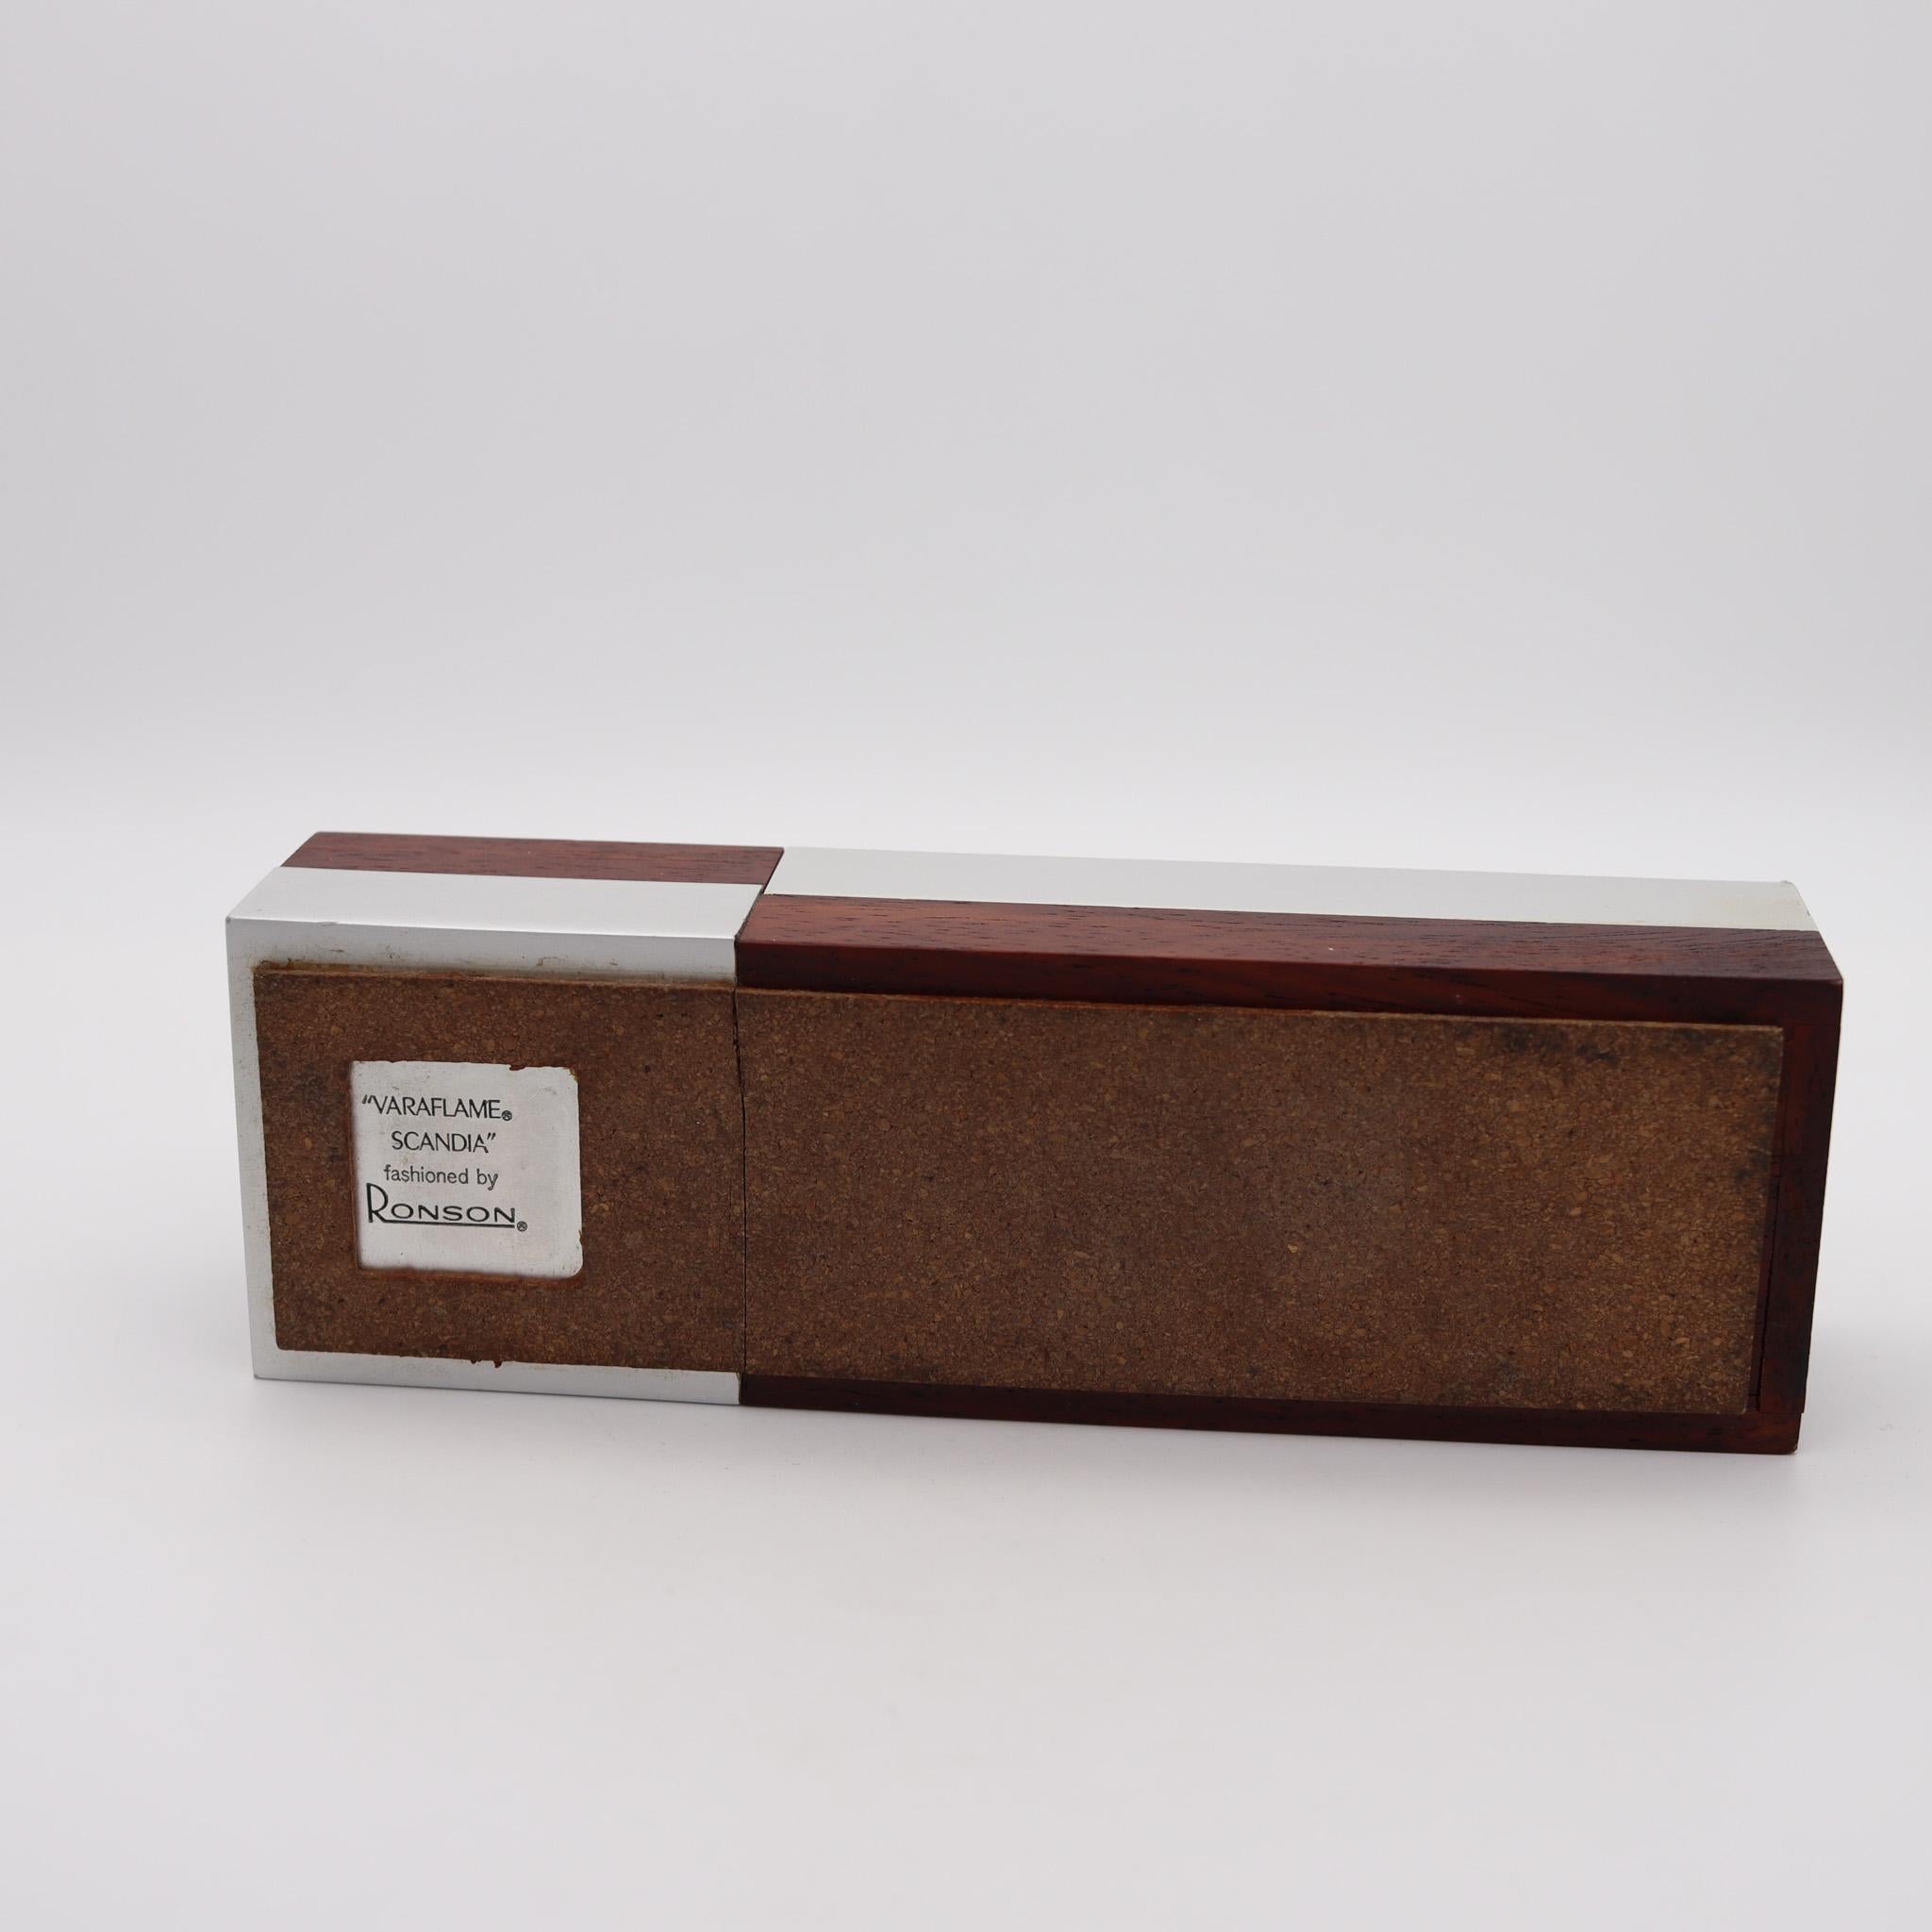 RONSON 1960 Germany Modernist Cigarette Lighter Box in Cedar & Brushed Aluminum For Sale 2